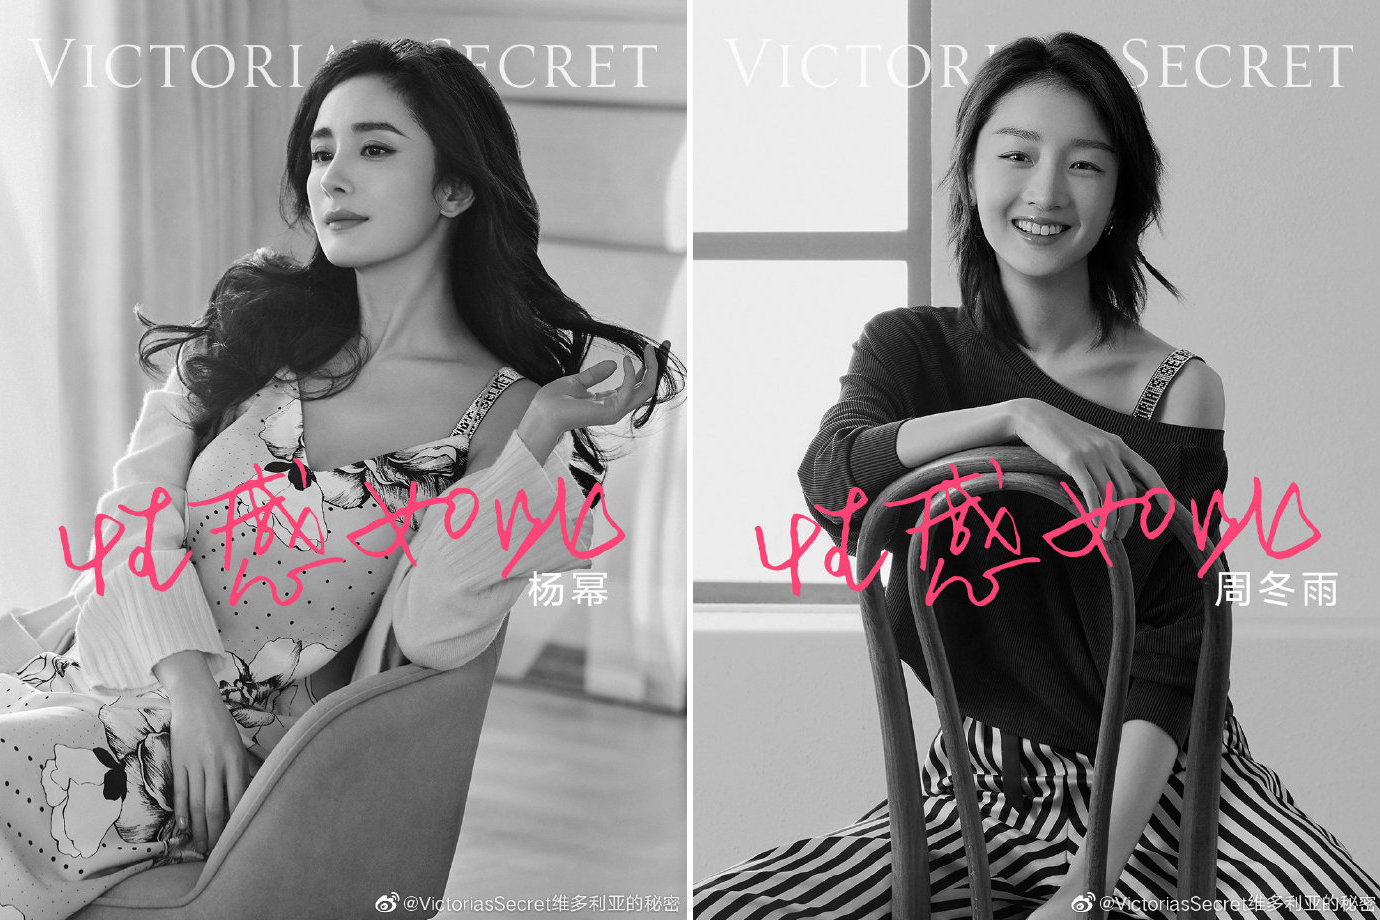 Victoria's Secret Unveils Surprising New Chinese Spokesmodel Line